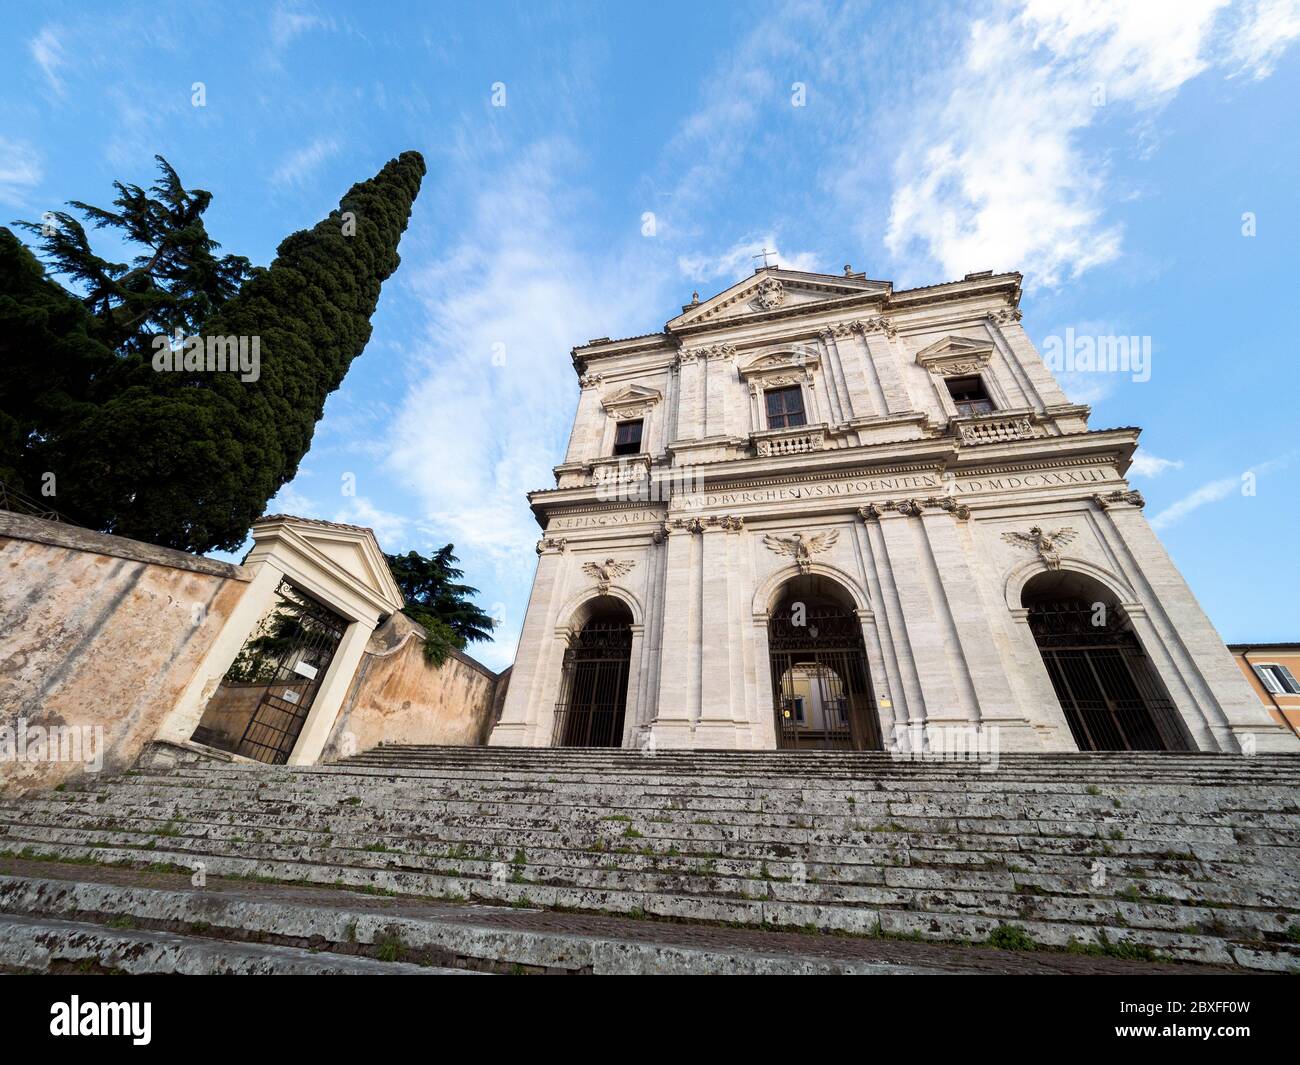 Barocke Fassade der Kirche San Gregorio al Celio von Giovanni Battista Soria - Rom, Italien Stockfoto